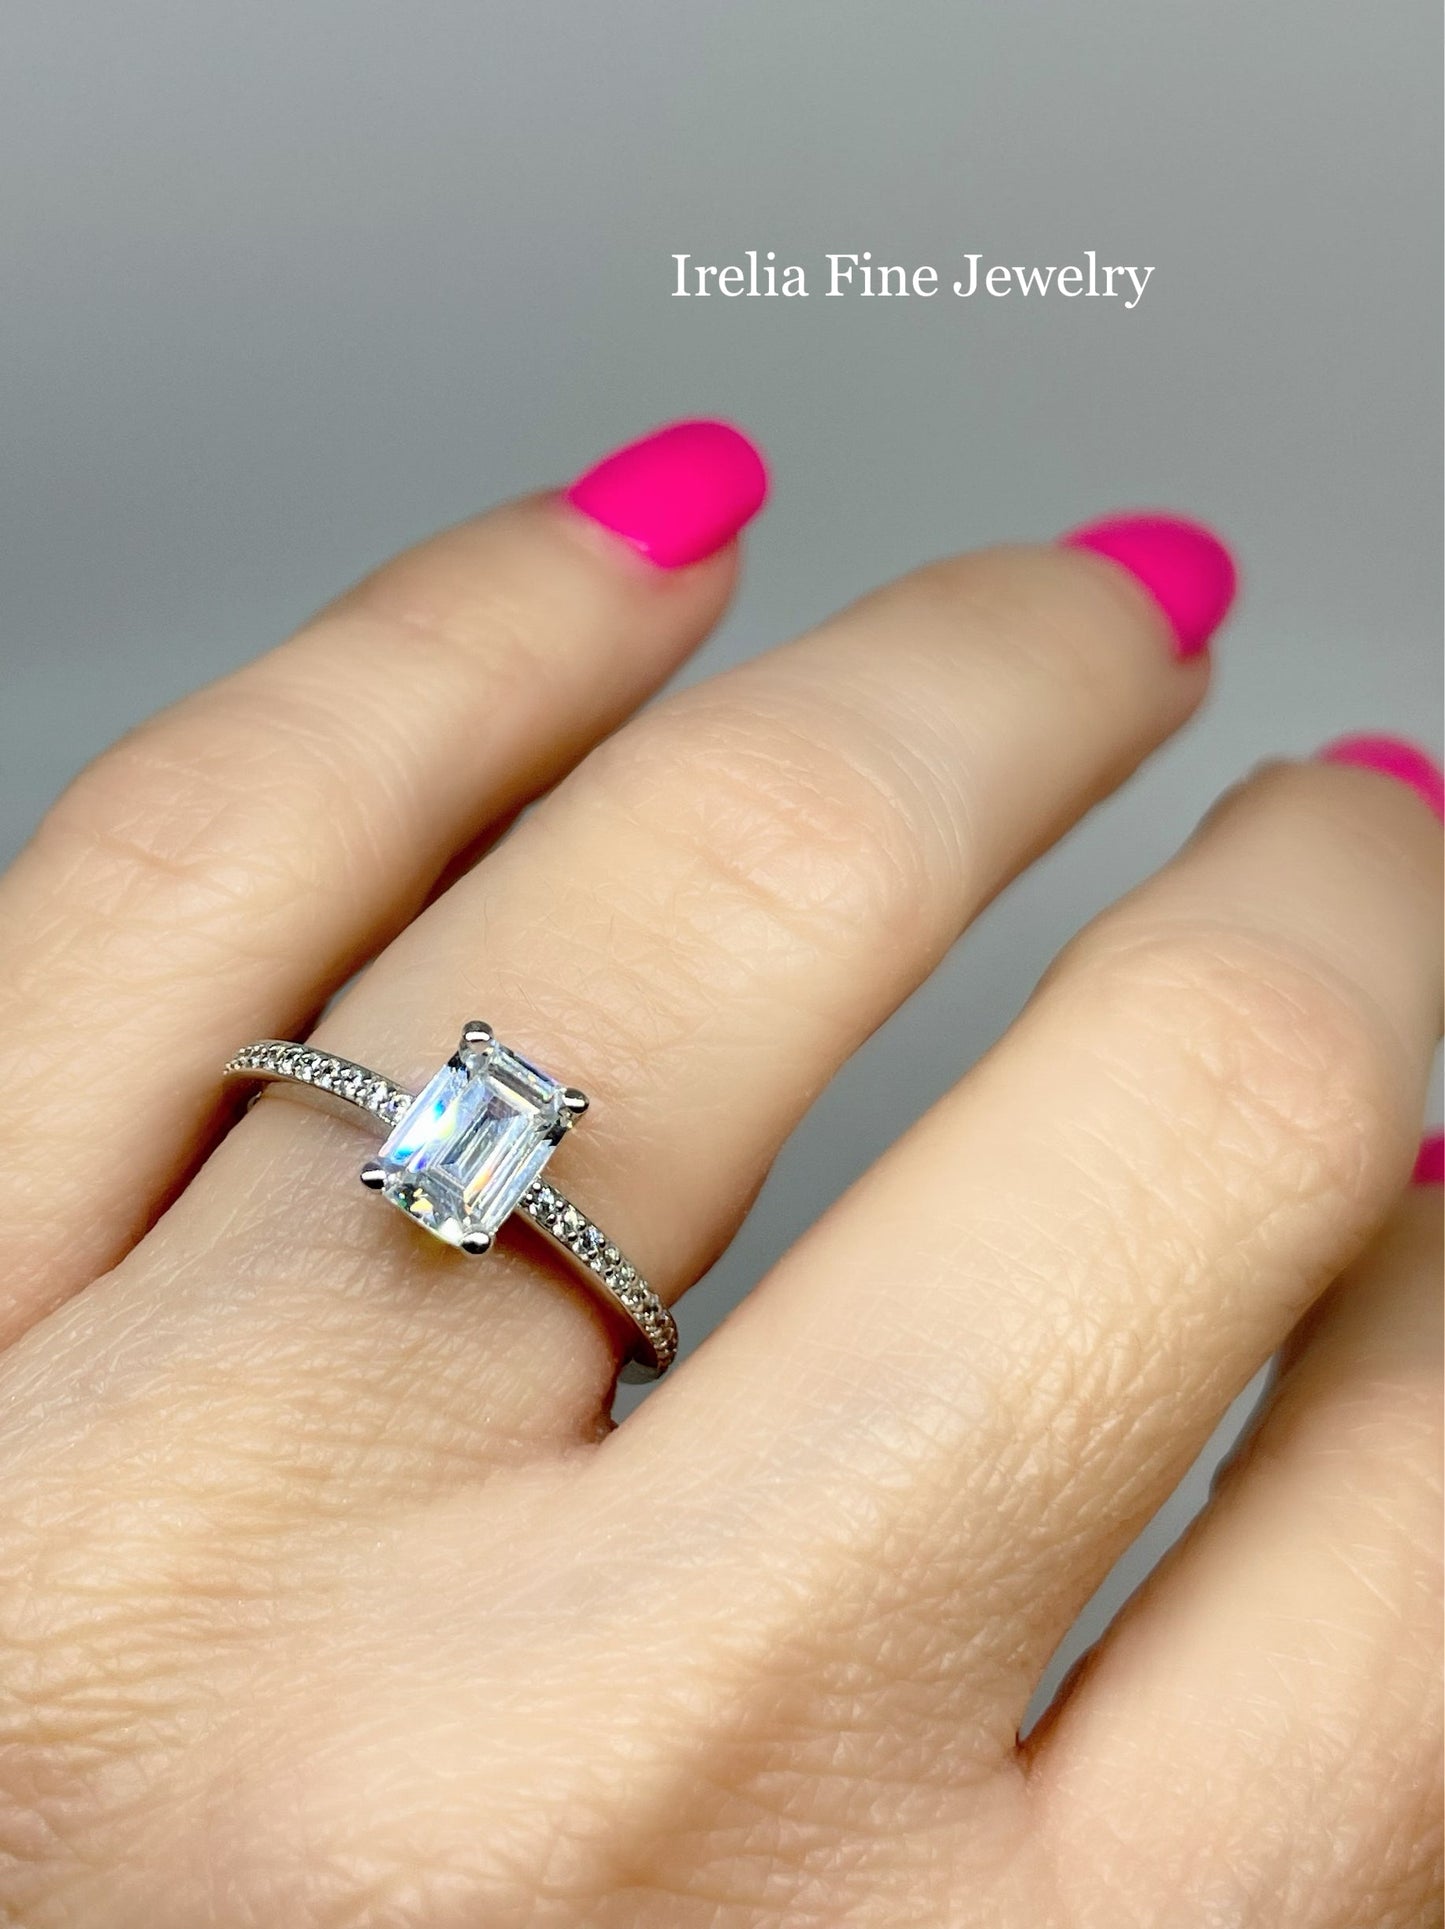 1.17 Carat Emerald Cut Lab Diamond Engagement Ring, Metal 18k White Gold,  Color F , Clarity VVS2 - GIA 522599027